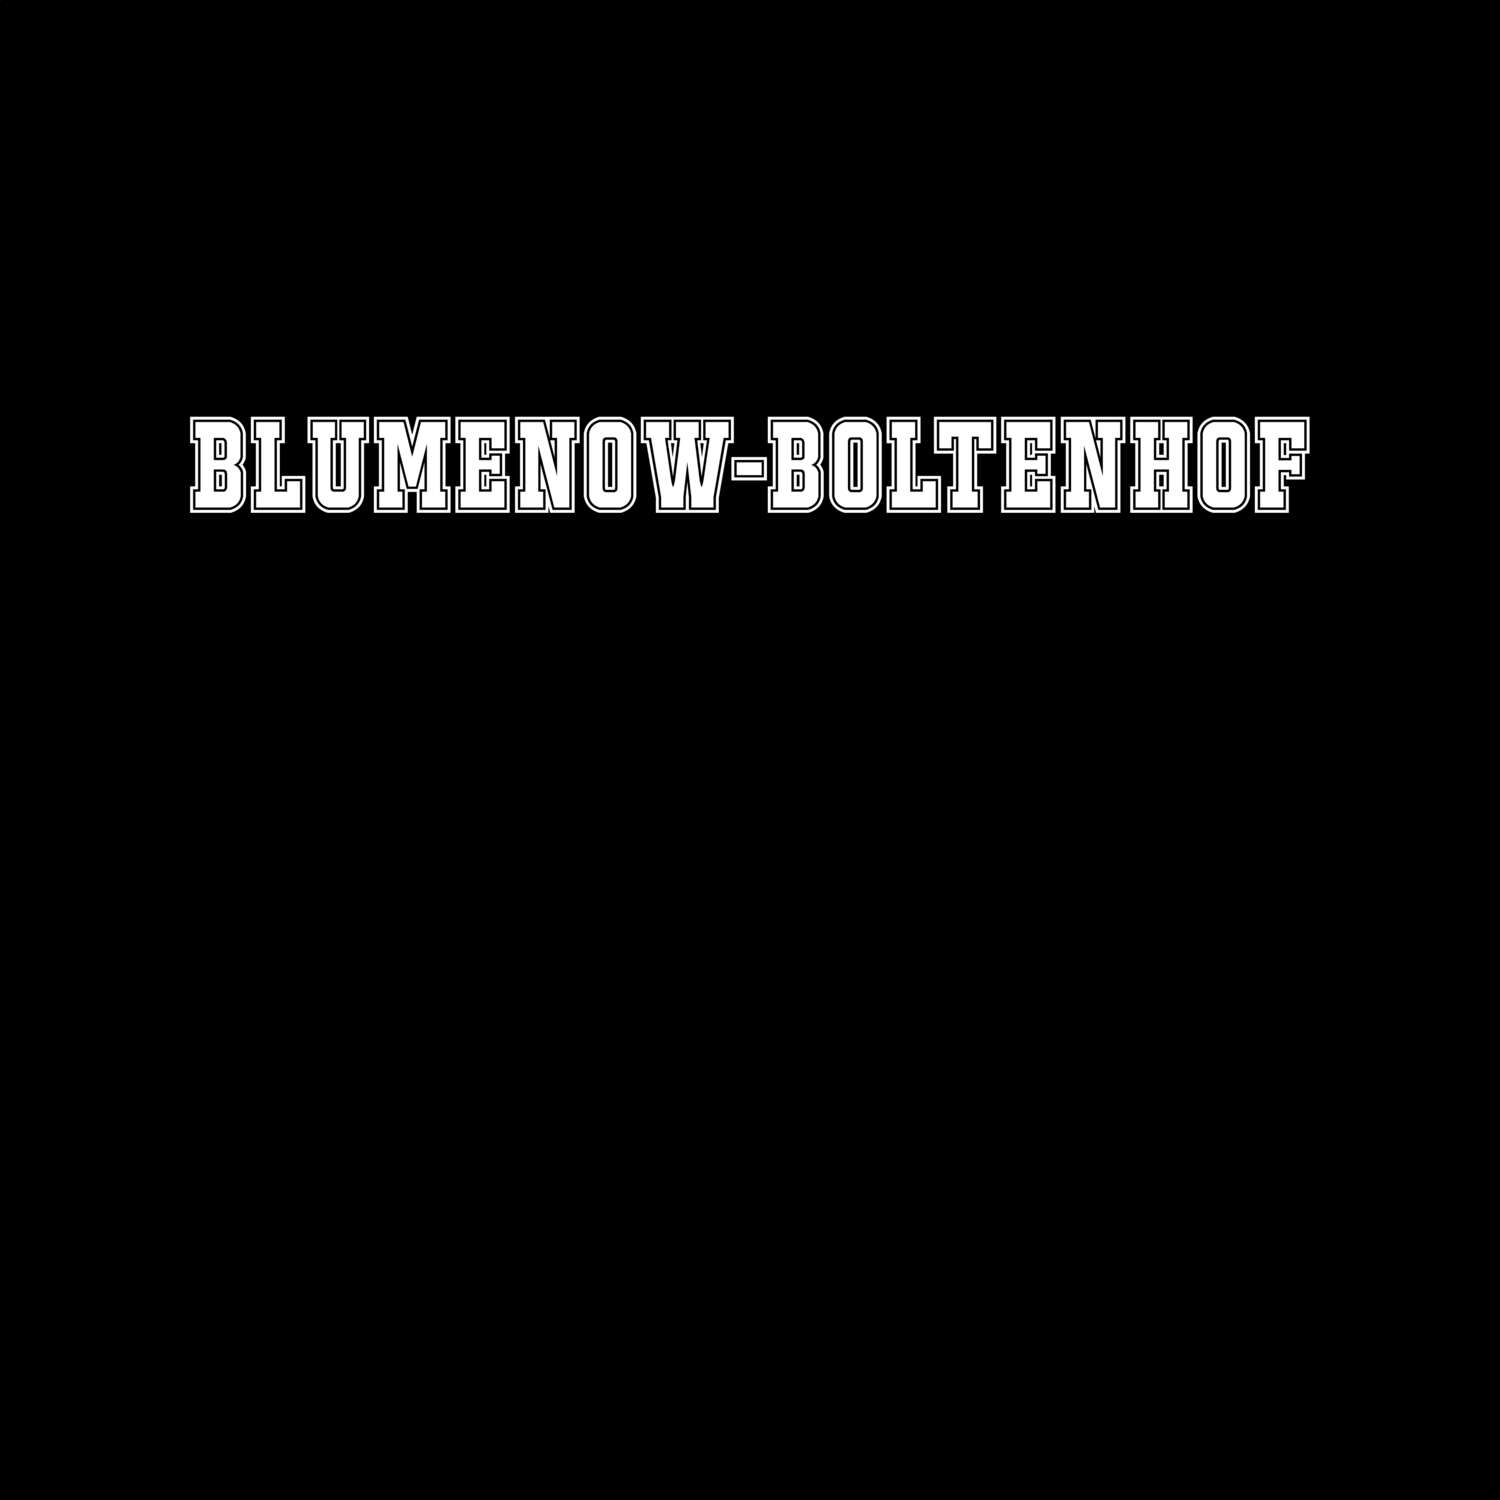 Blumenow-Boltenhof T-Shirt »Classic«